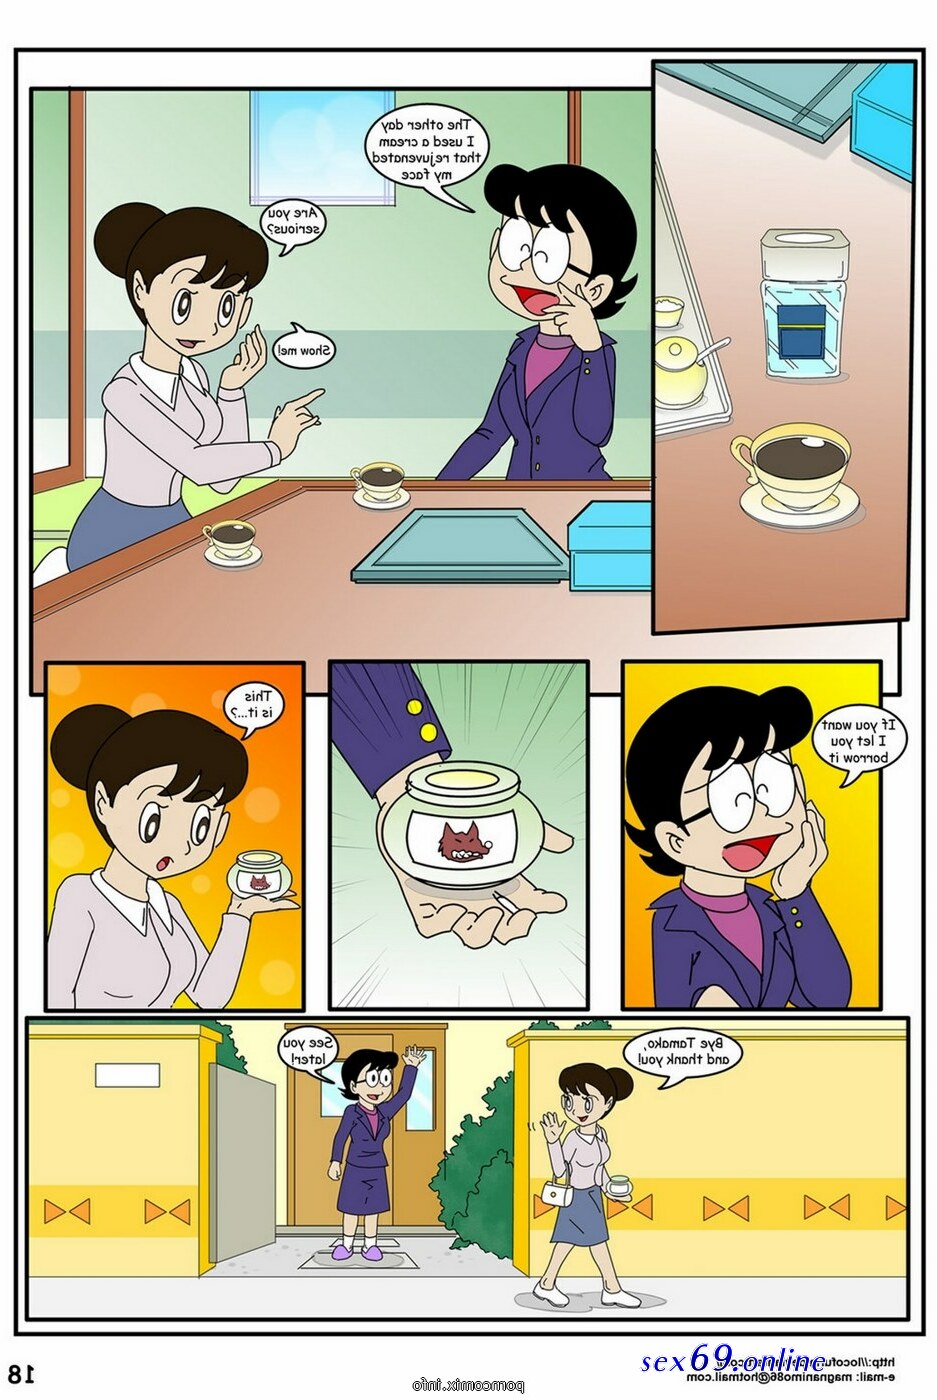 Nobita Mom Cartoon Sexy Videos - sex cartoon doramon comic - Sexy photos